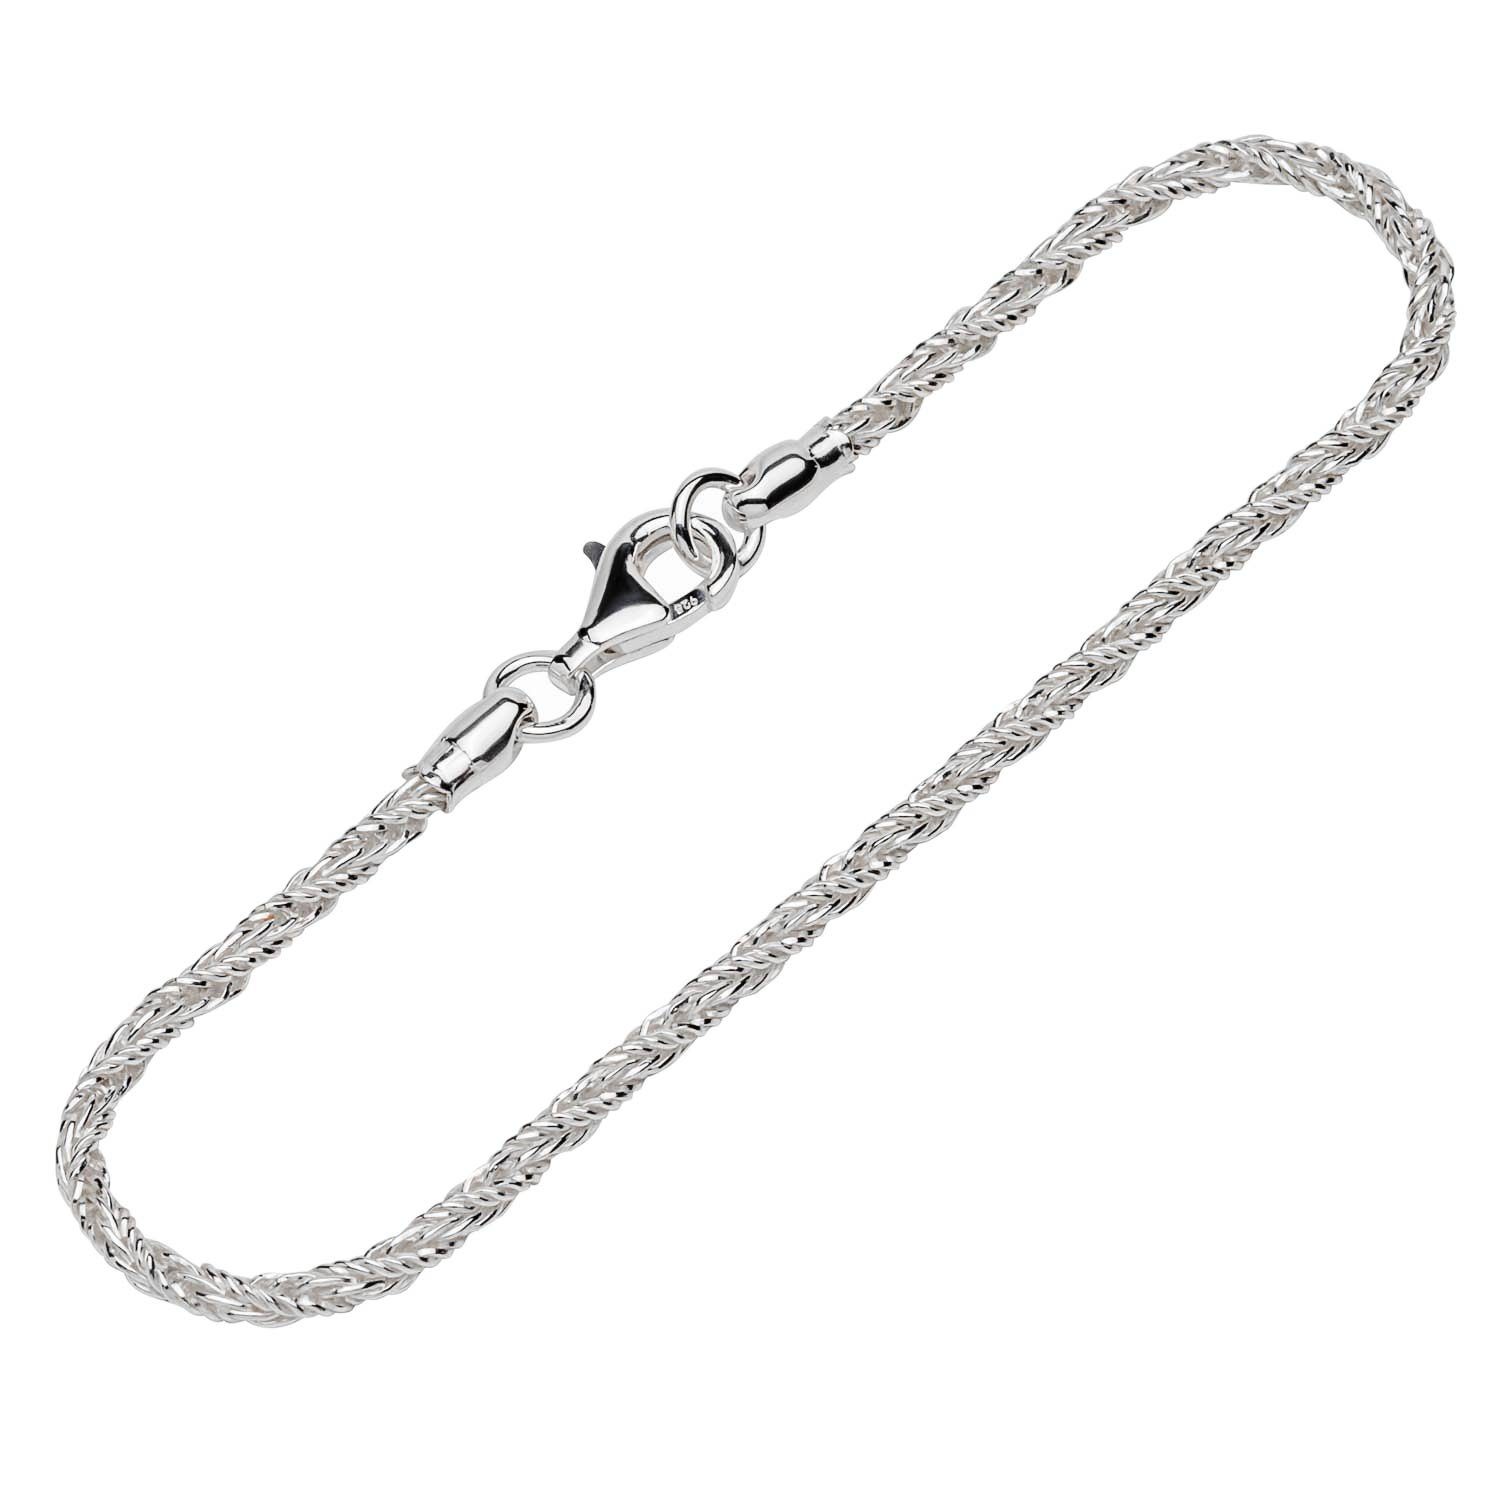 NKlaus Silberarmband Armband 925 Sterling Silber 19cm Fuchsschwanzkette